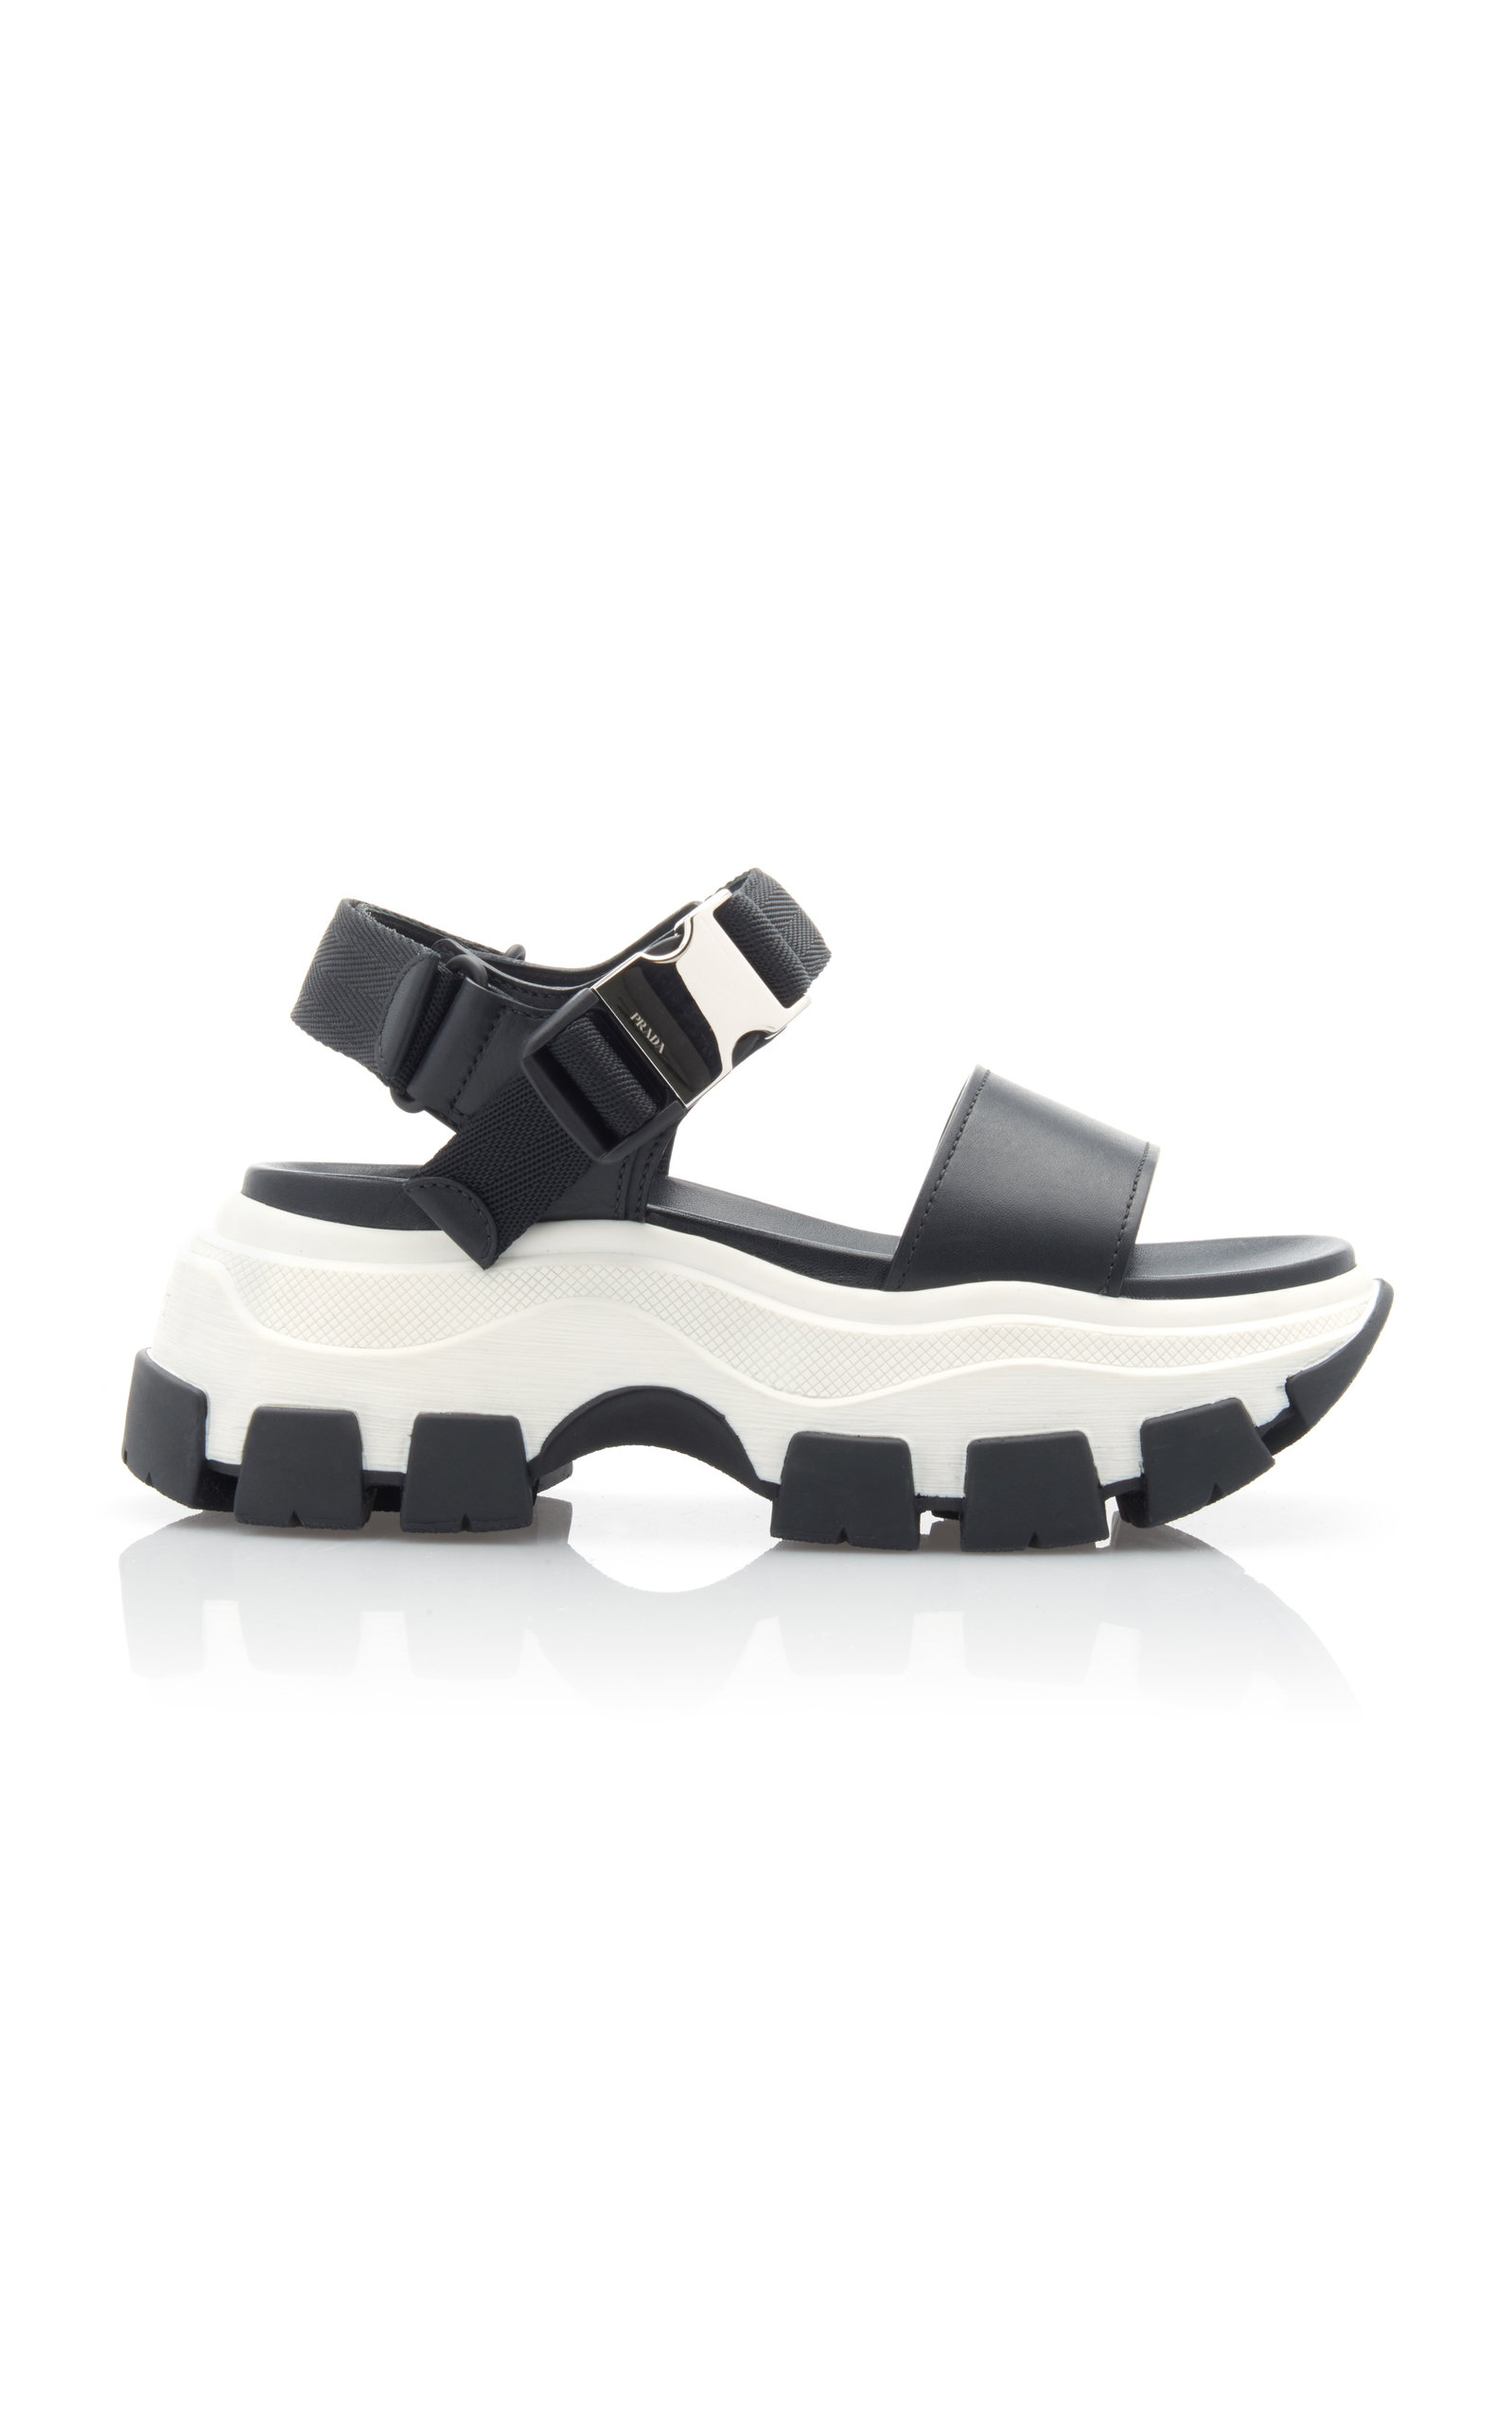 Prada - Women's Buckled Leather And Rubber Sandals - Black/white - IT 39 - Moda Operandi